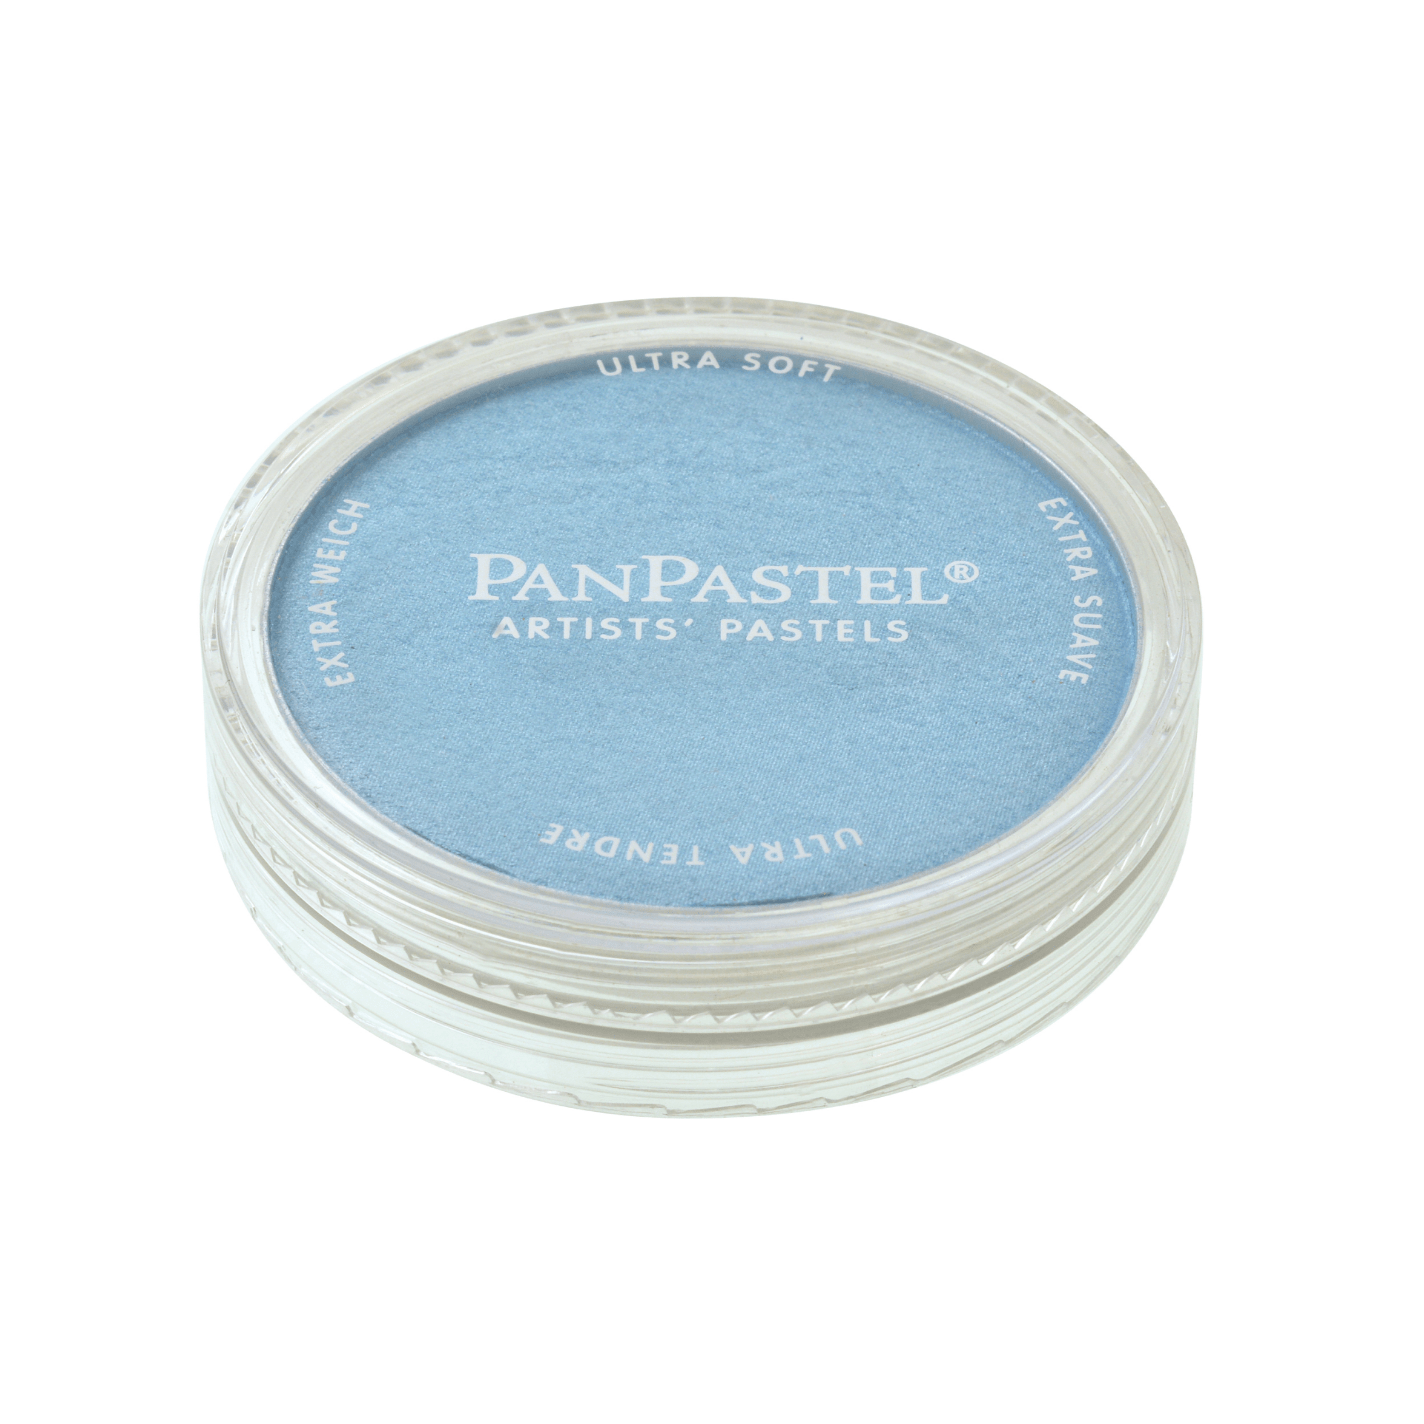 Panpastel Tørpastel 9ml Pearlescent Blue 955.5